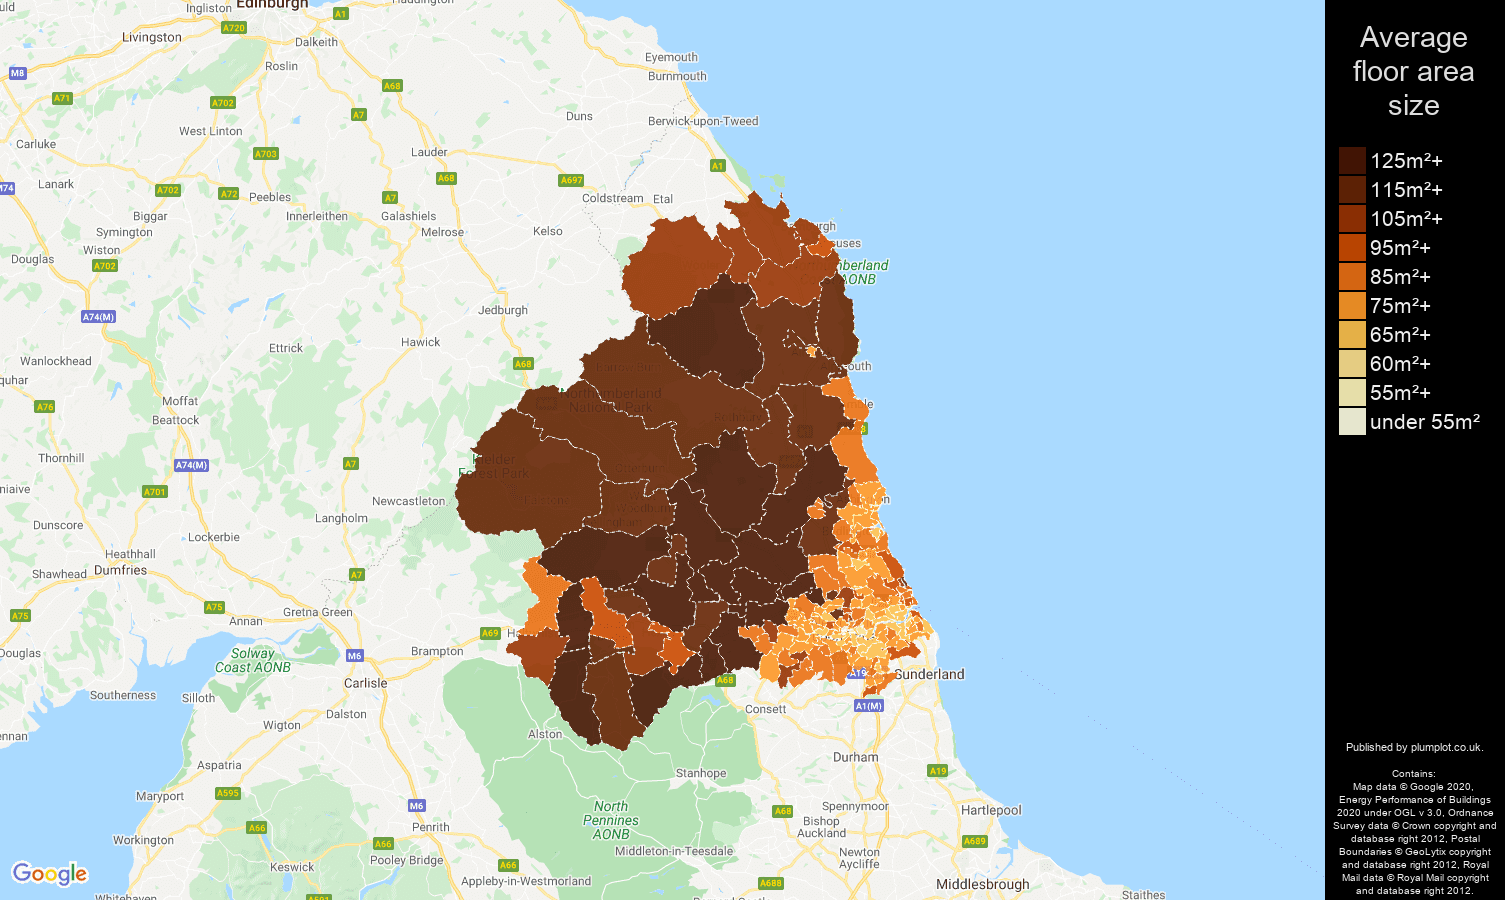 Newcastle upon Tyne map of average floor area size of properties